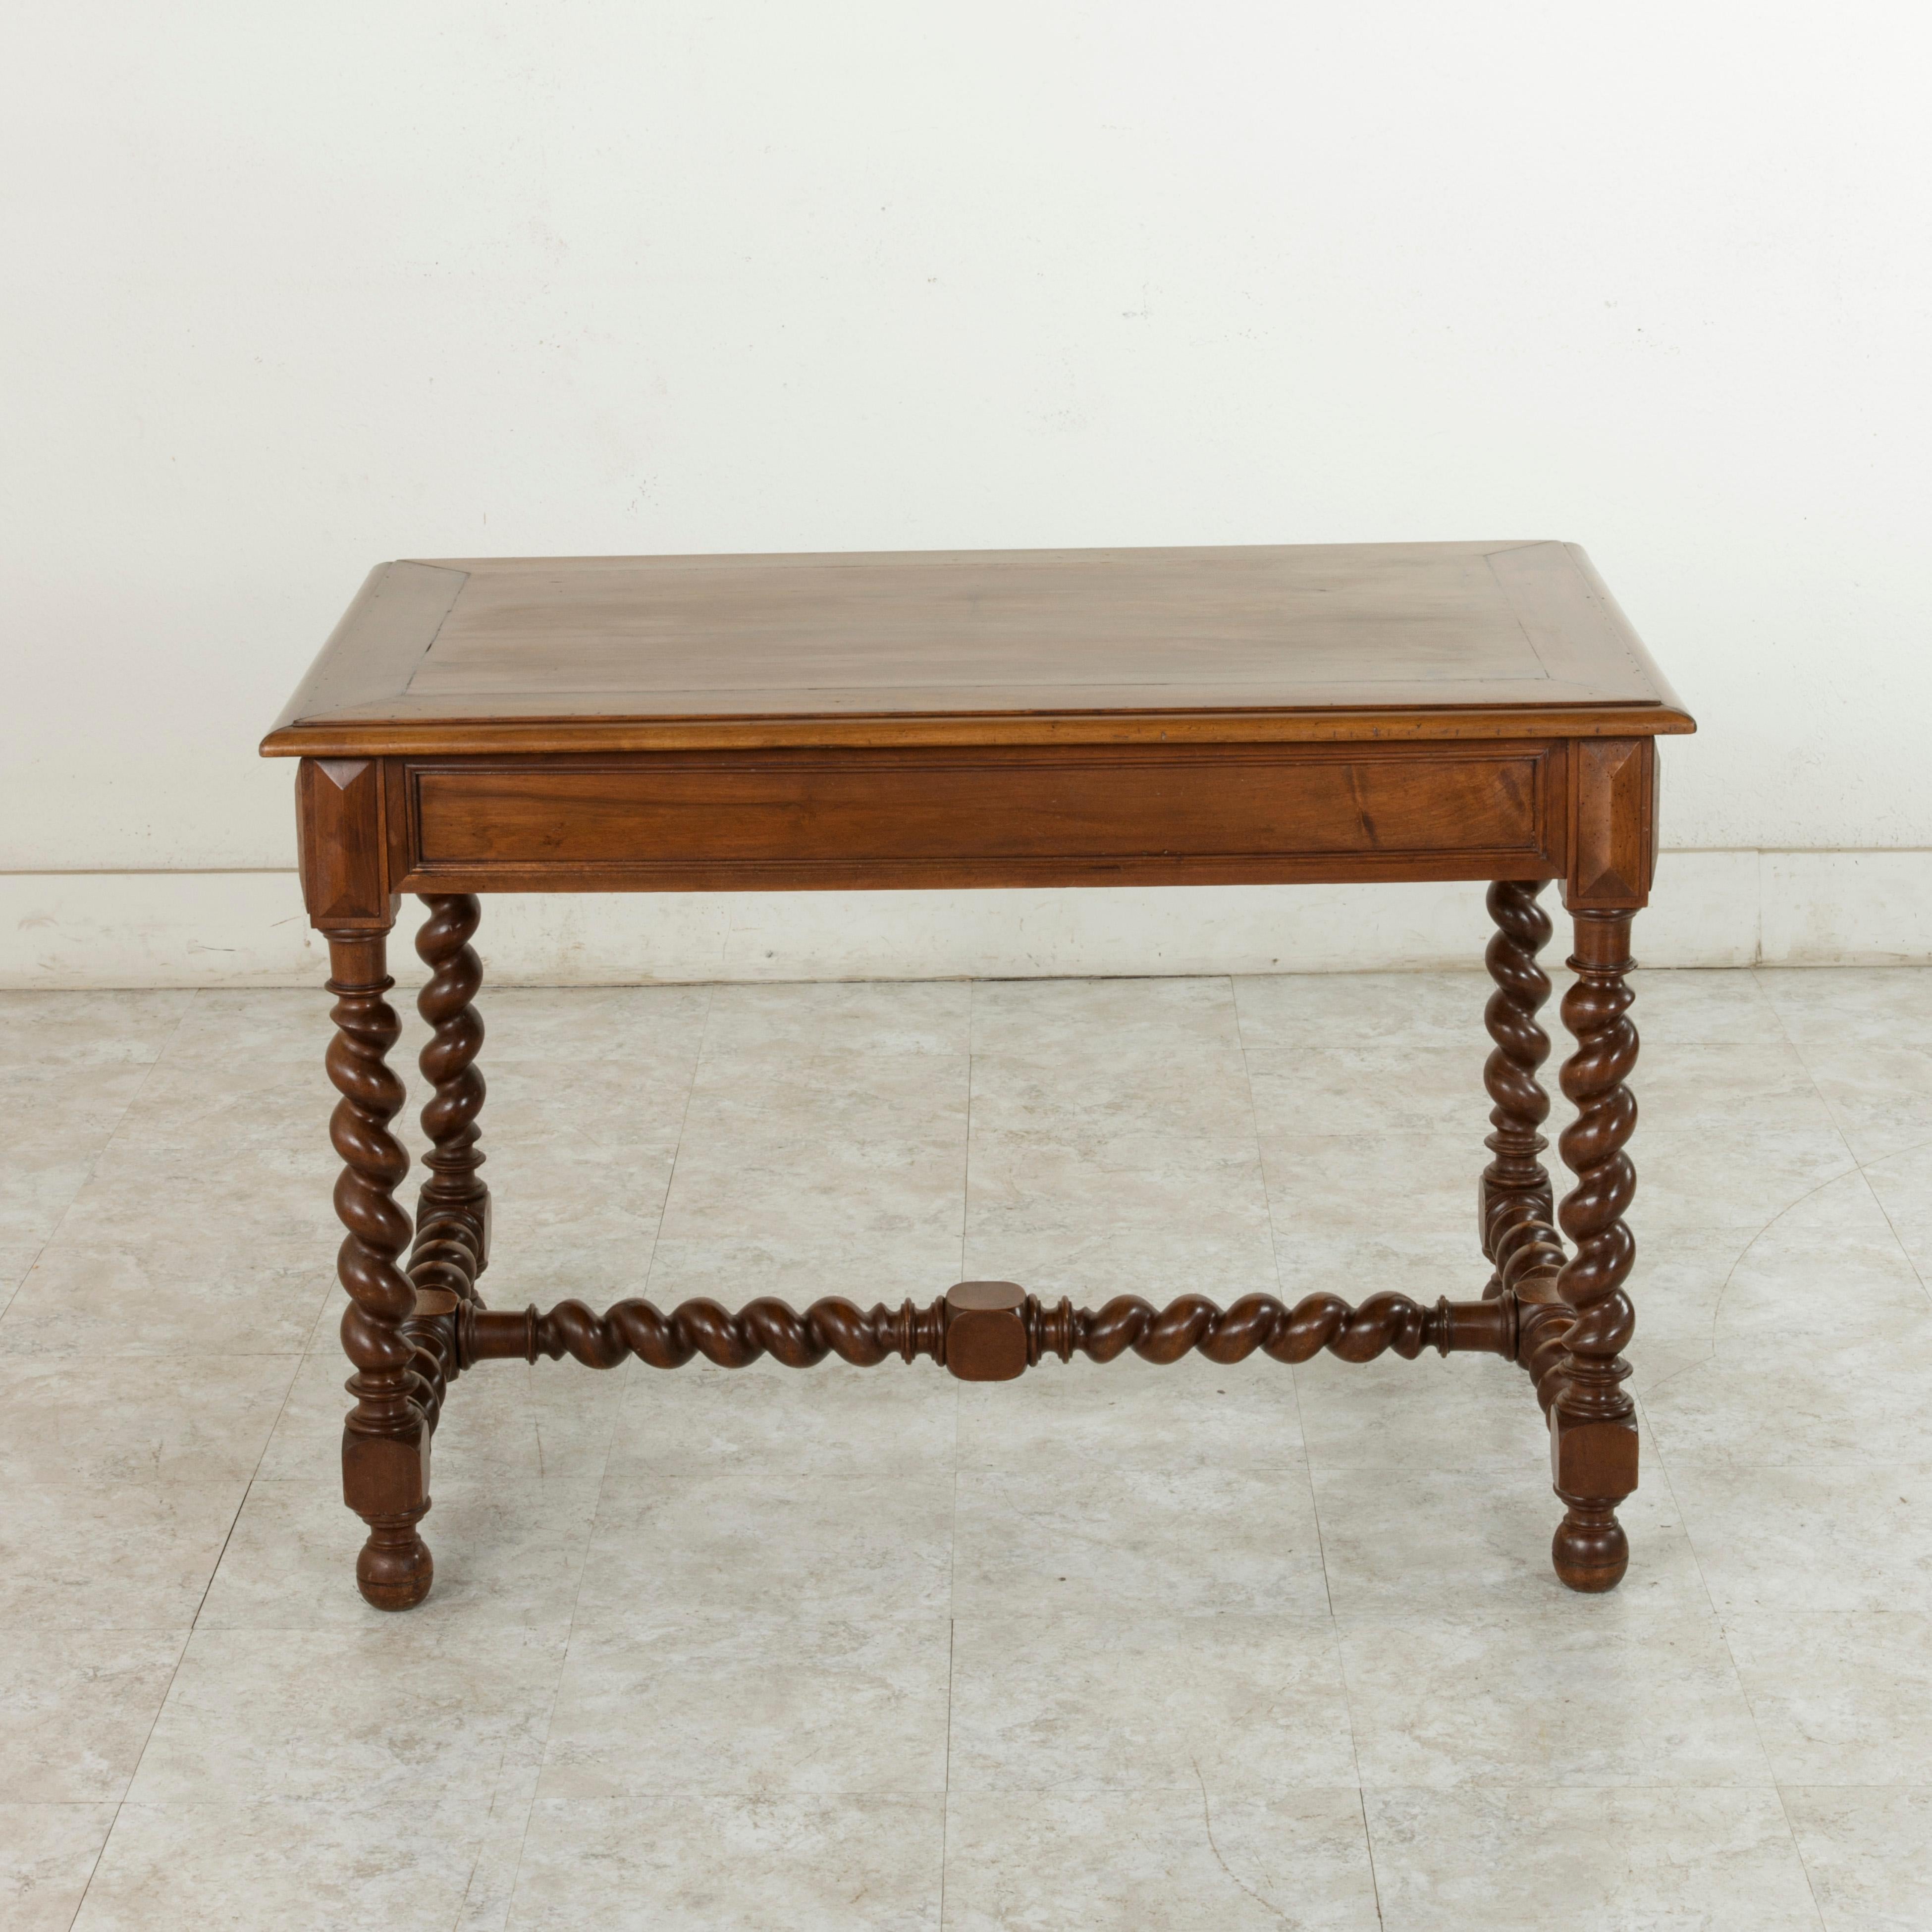 French Late 19th Century Louis XIII Style Walnut Writing Table, Desk, Barley Twist Legs